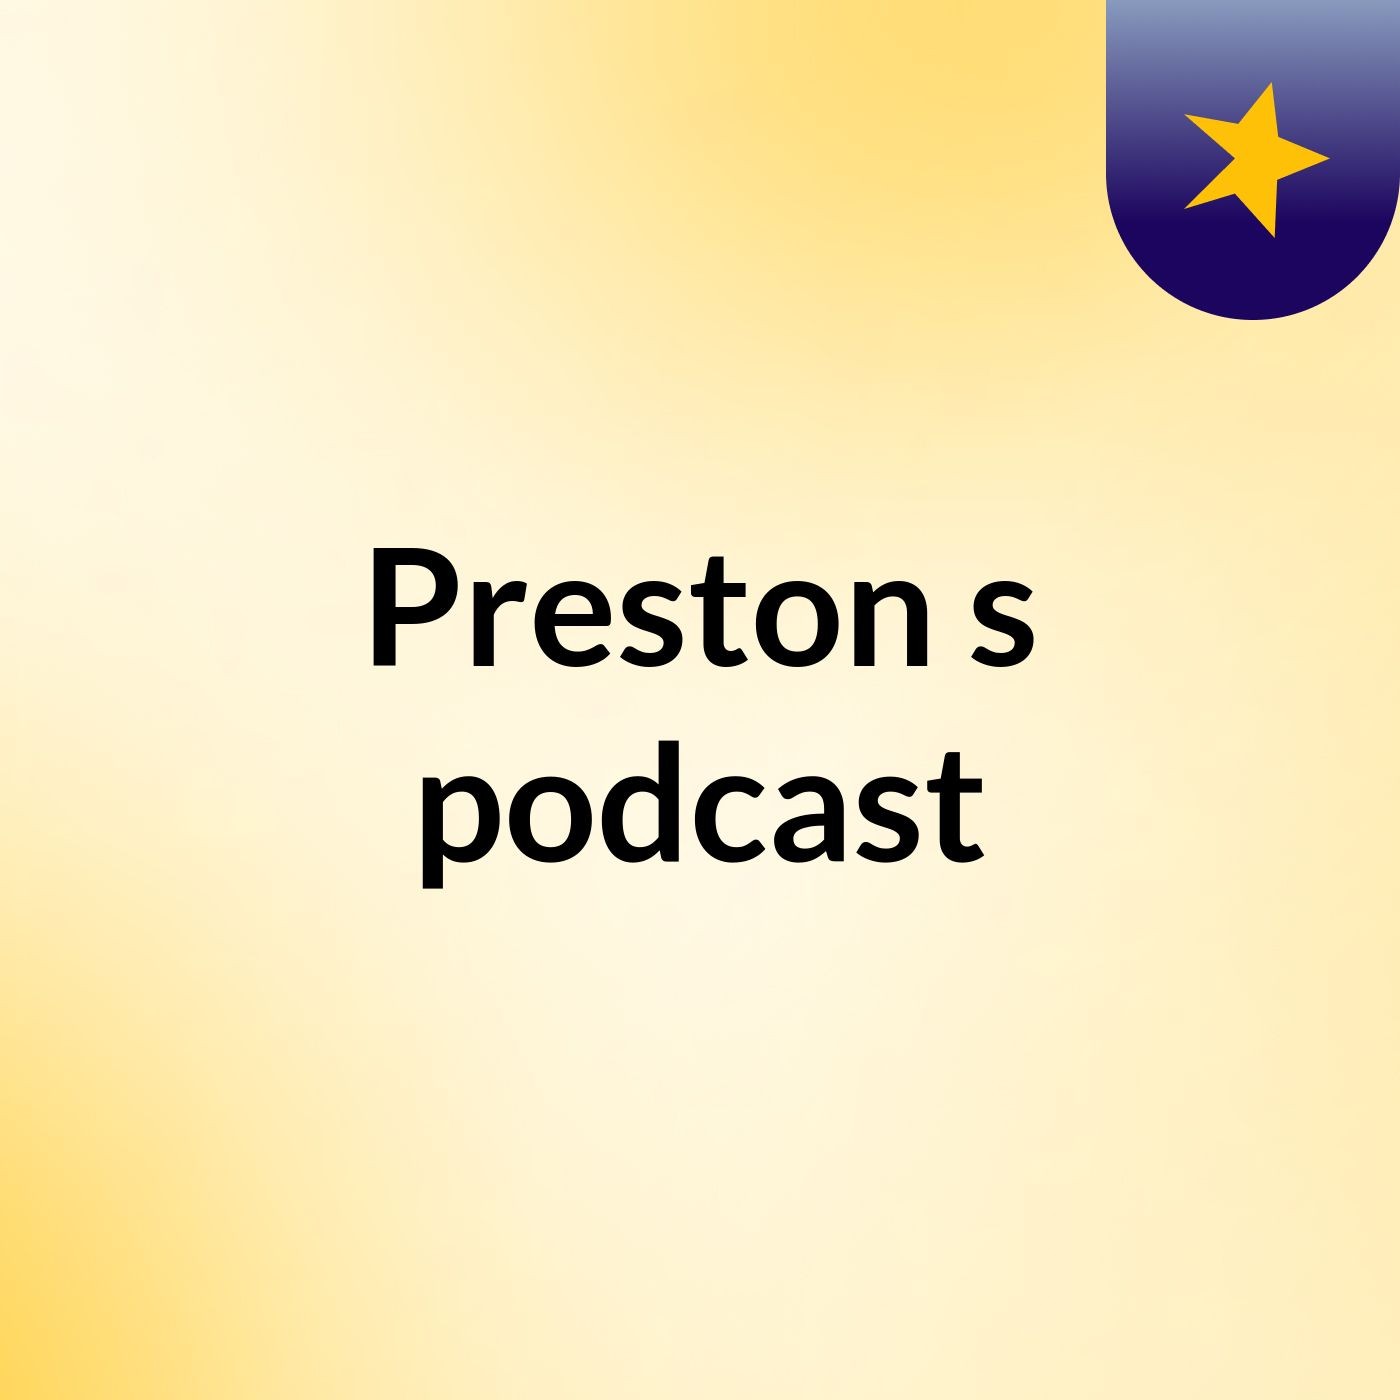 Preston's podcast